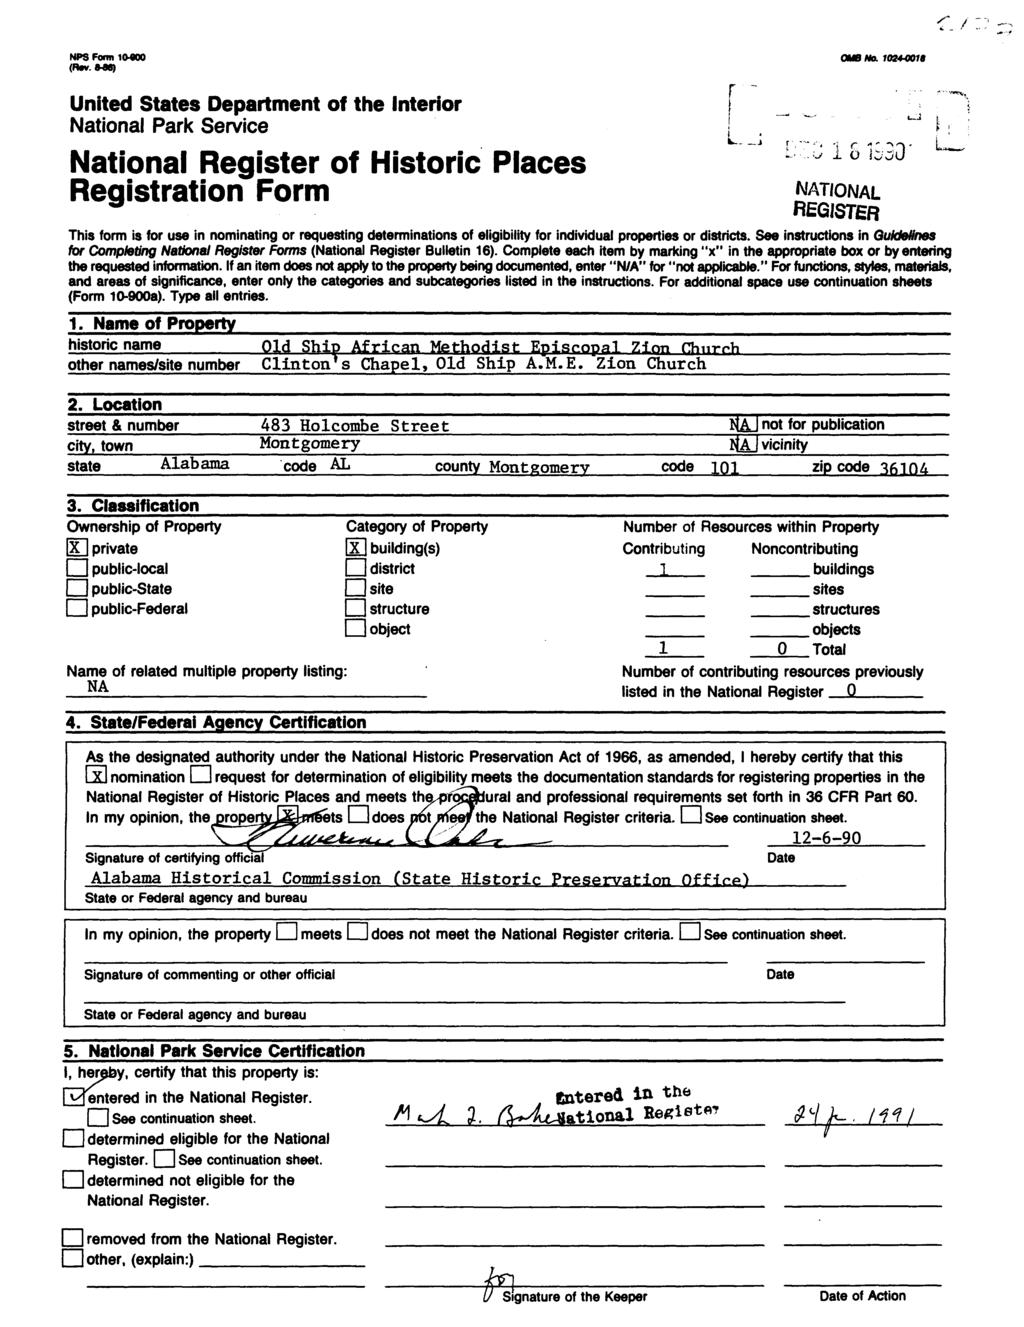 NPS Form 10*00 (Ftov.frM) United States Department of the Interior Registration Form r~ L-j OMB No.